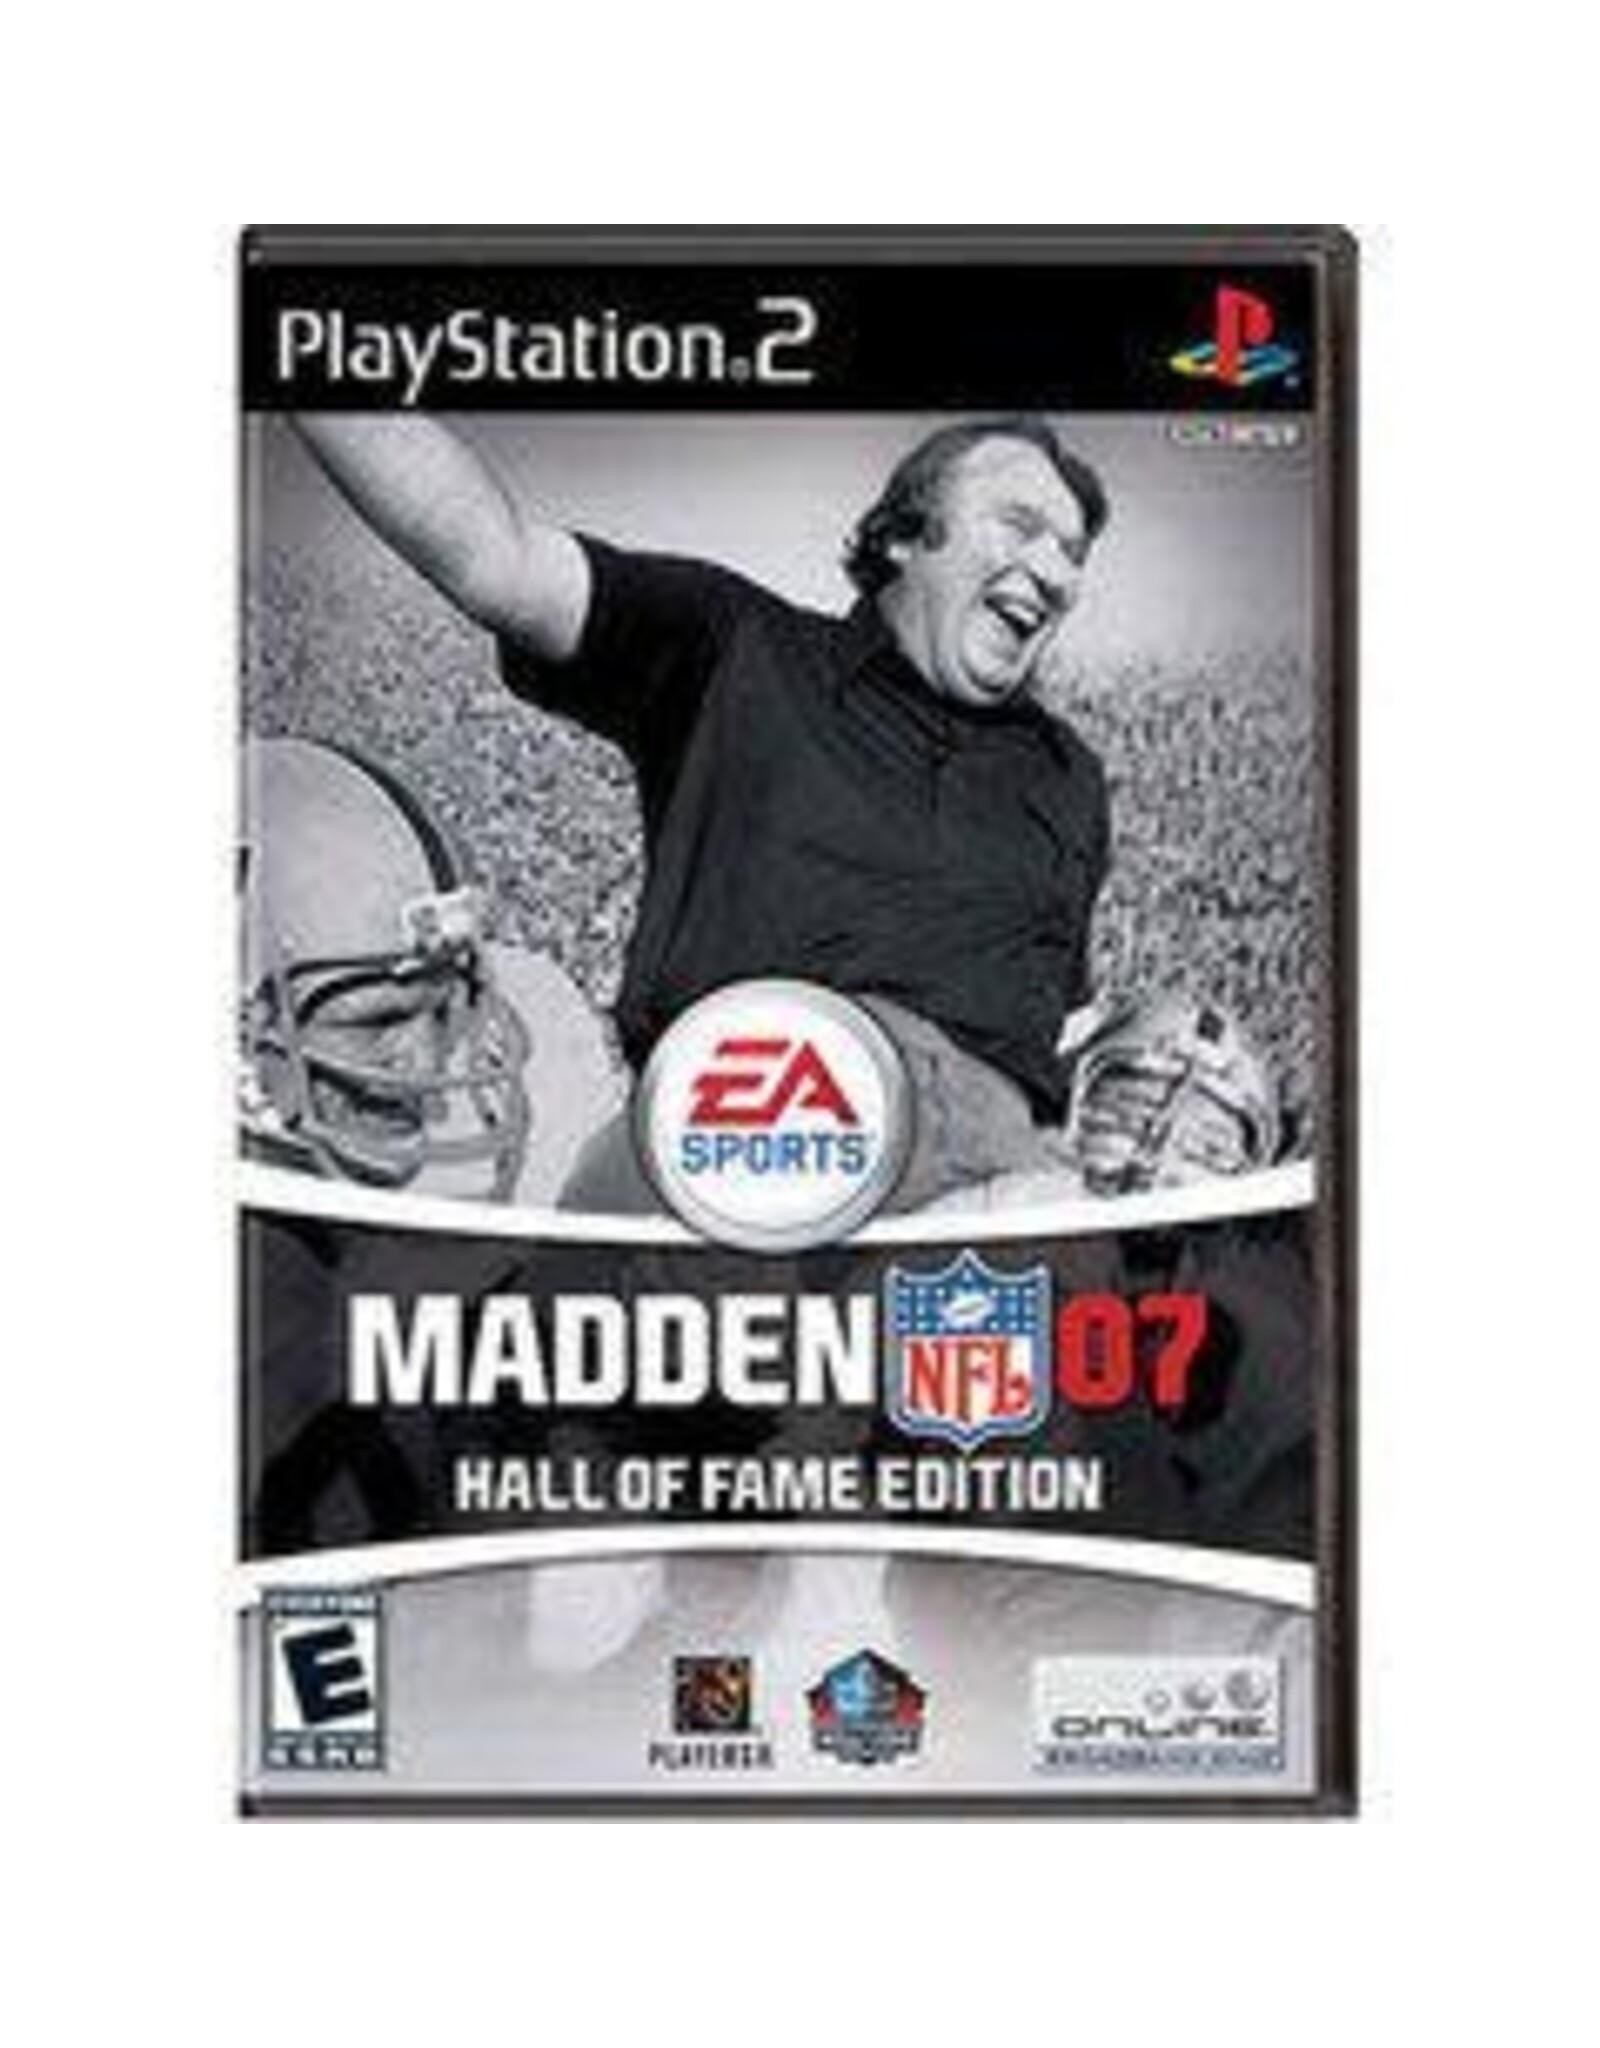 Playstation 2 Madden 2007 Hall of Fame Edition (CiB)